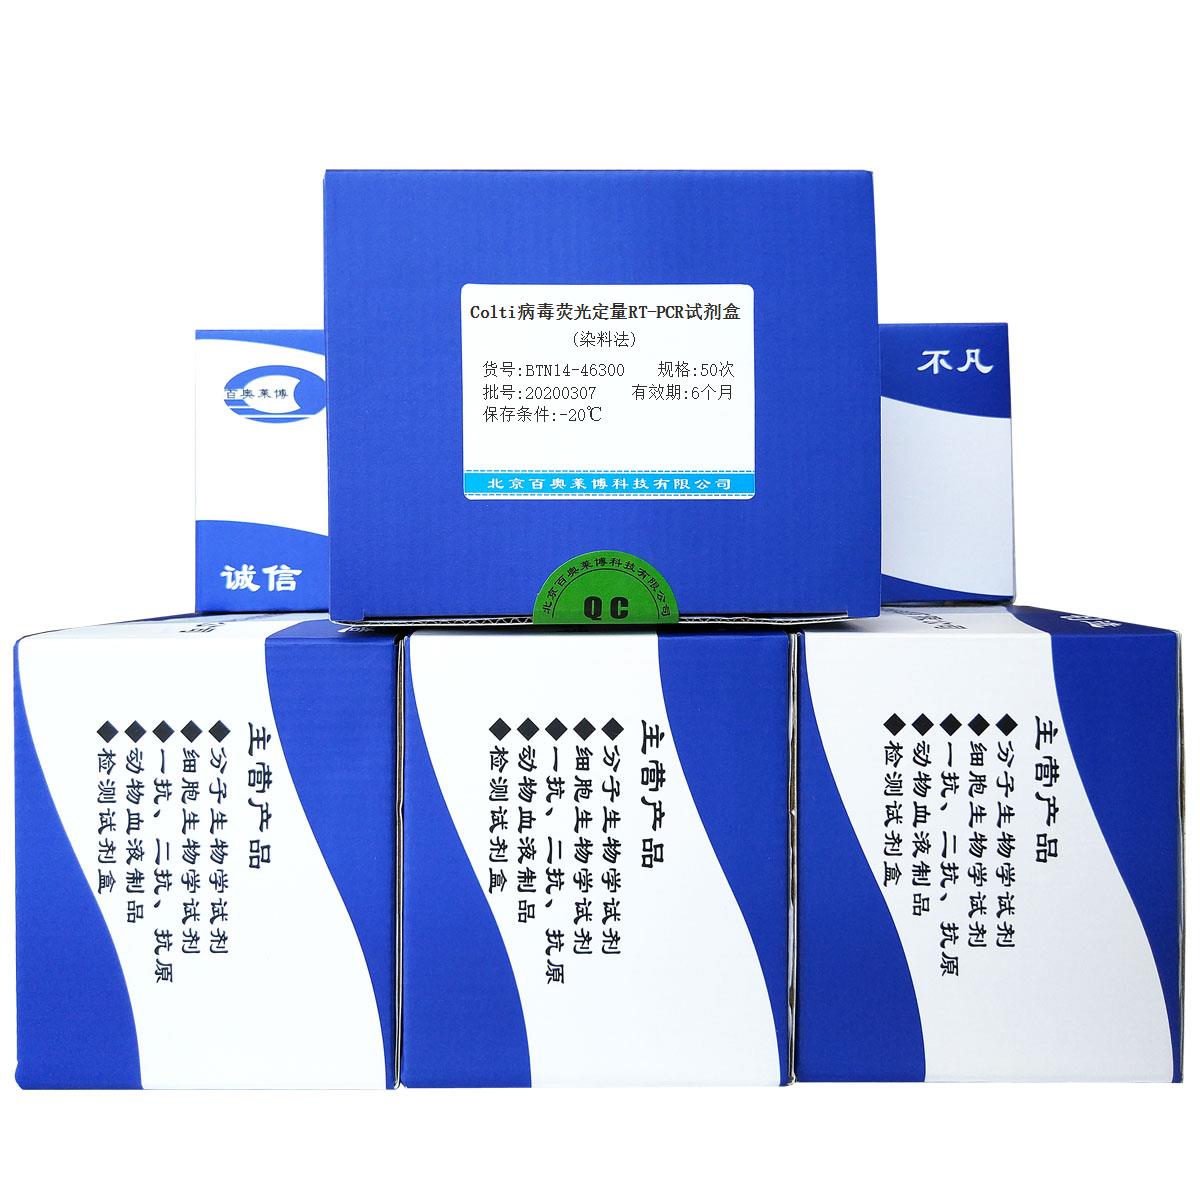 Colti病毒荧光定量RT-PCR试剂盒(染料法)